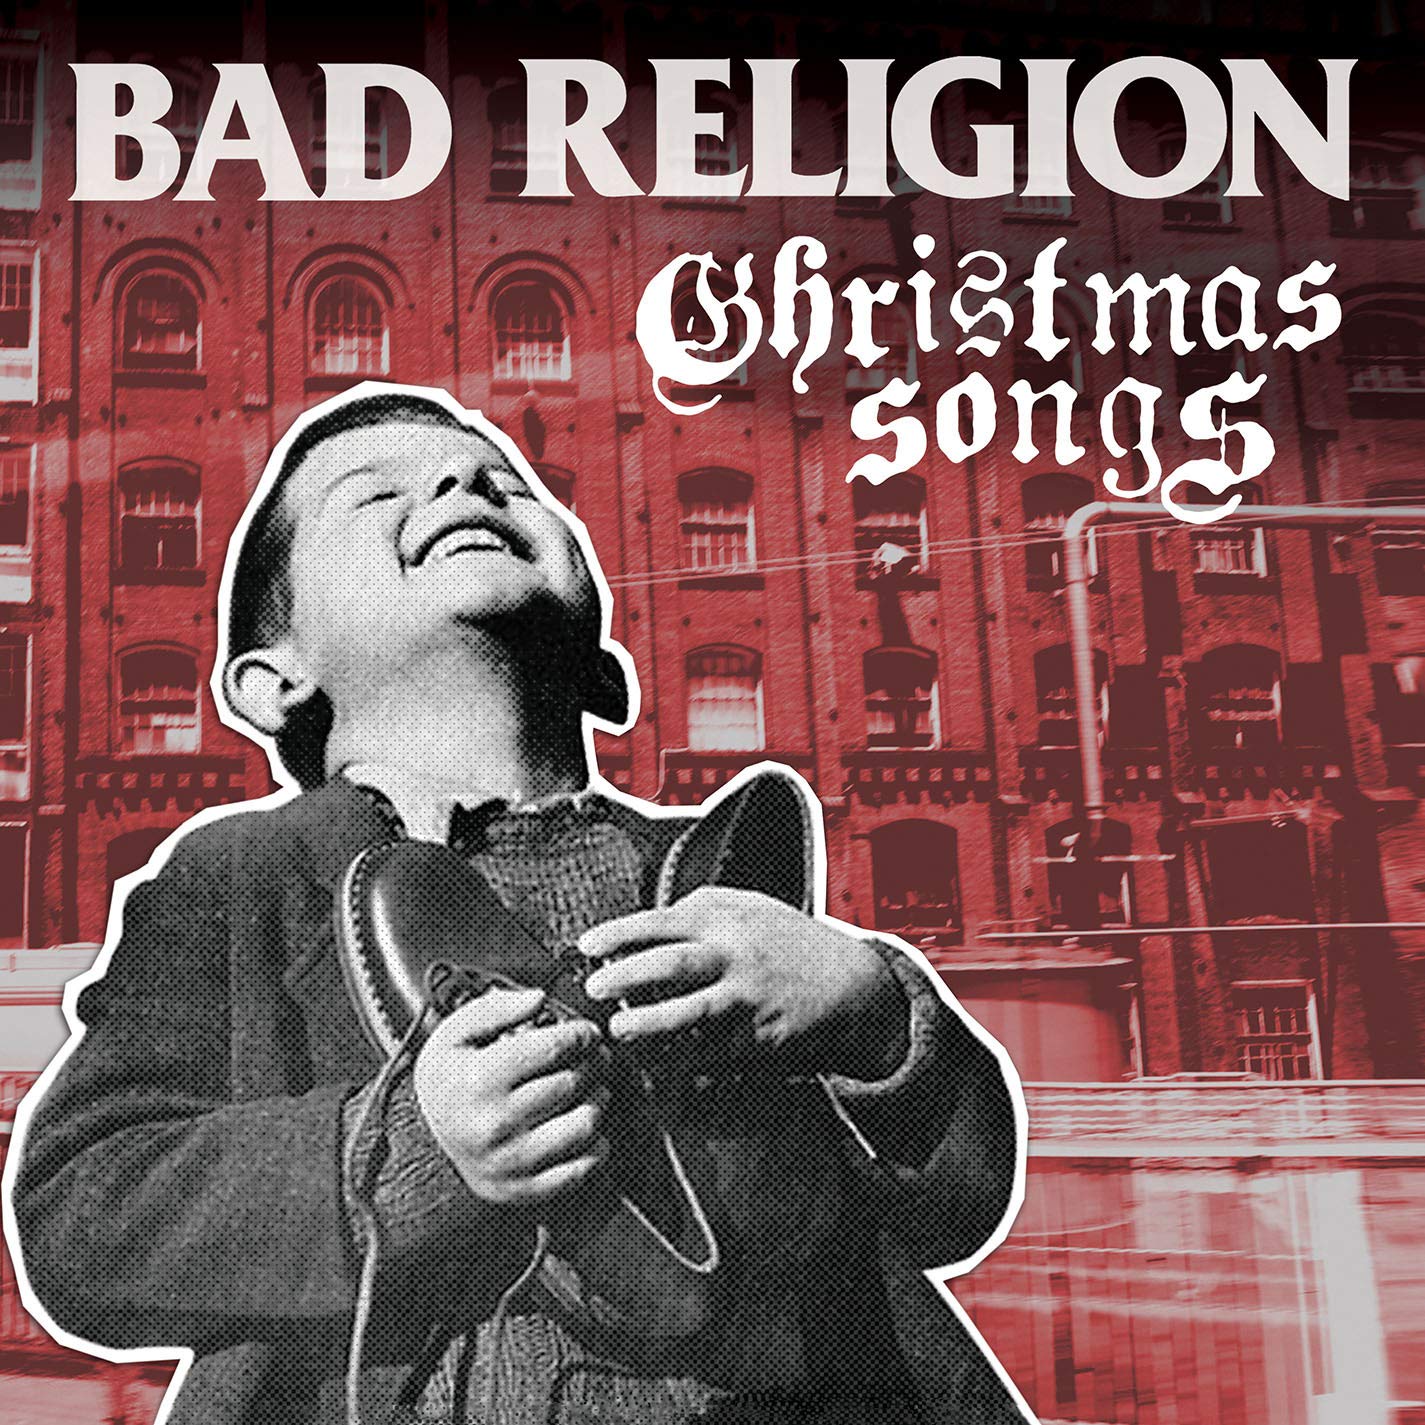 BAD RELIGION - CHRISTMAS SONGS Vinyl LP